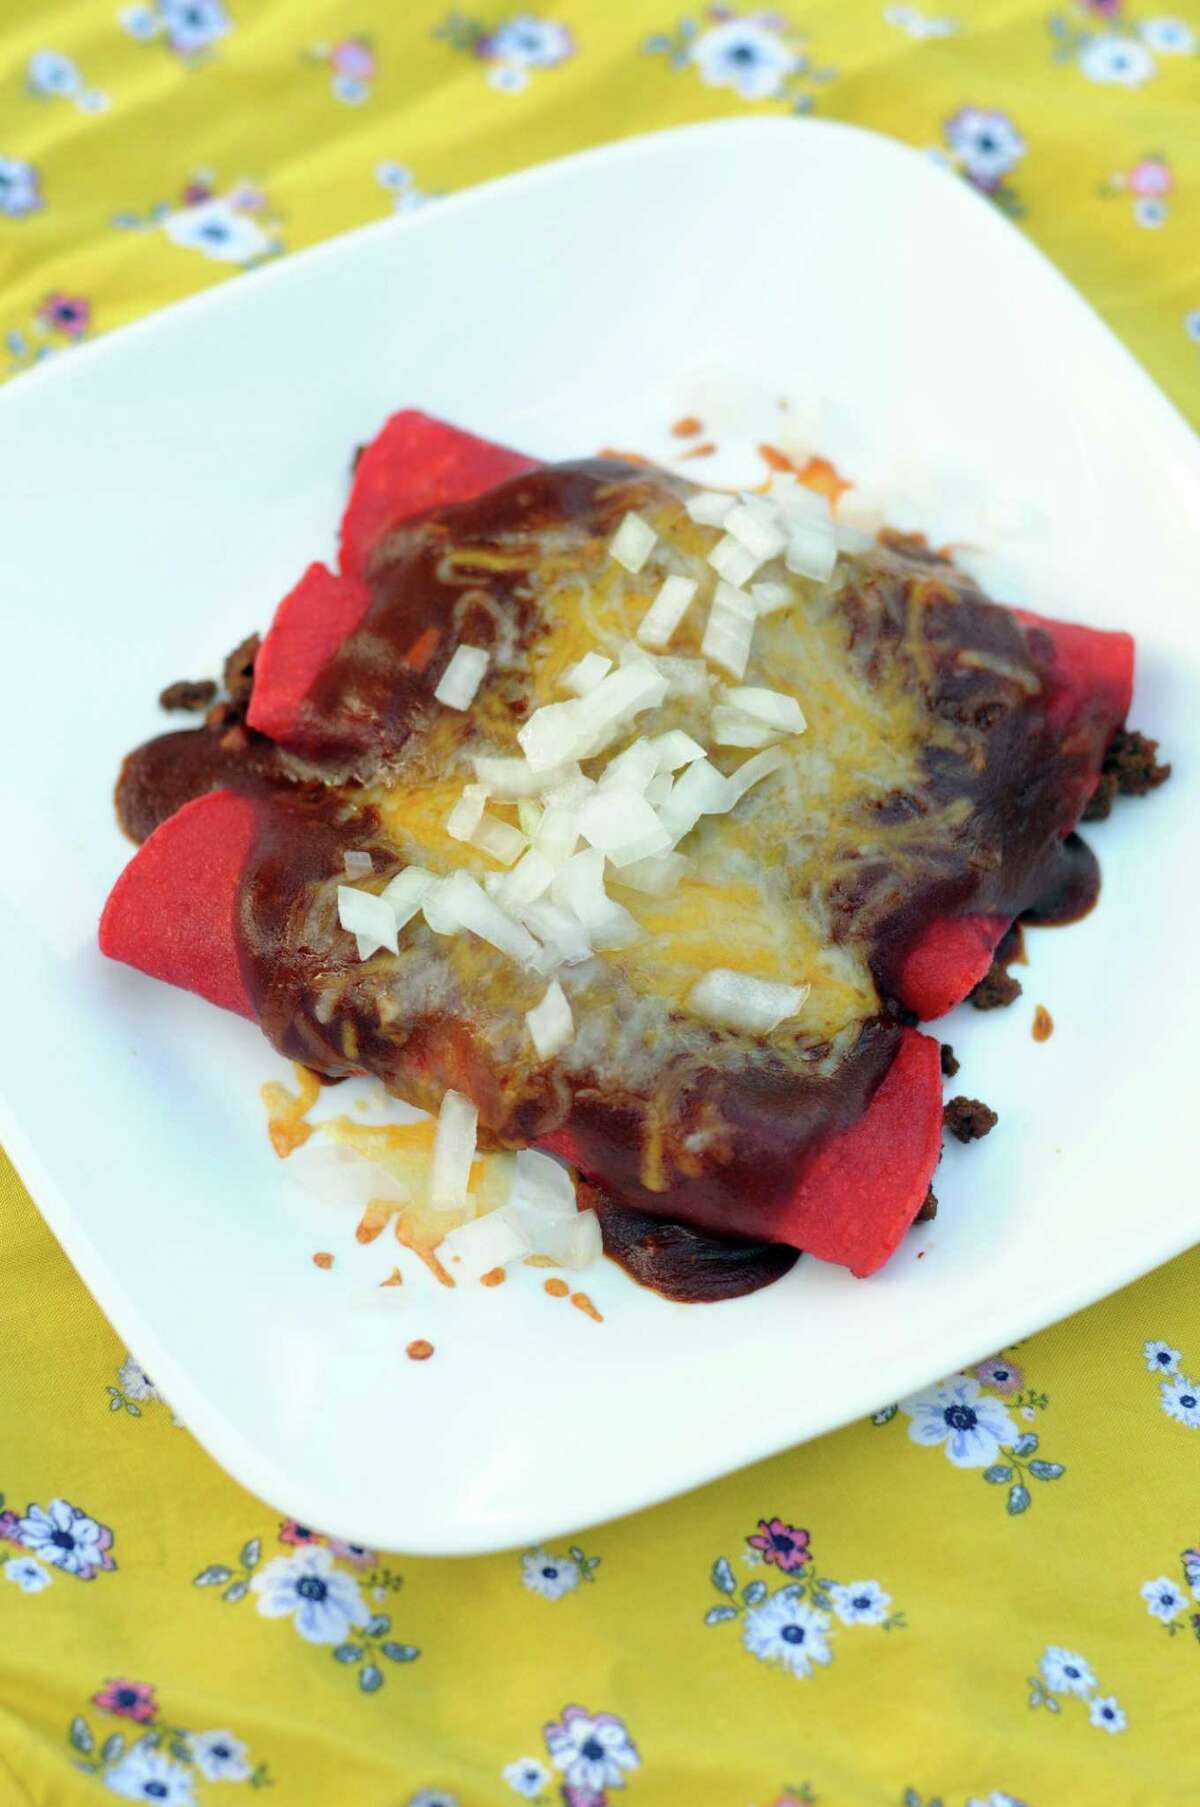 Tex-Mex-Style Ancho Chile Gravy Enchiladas